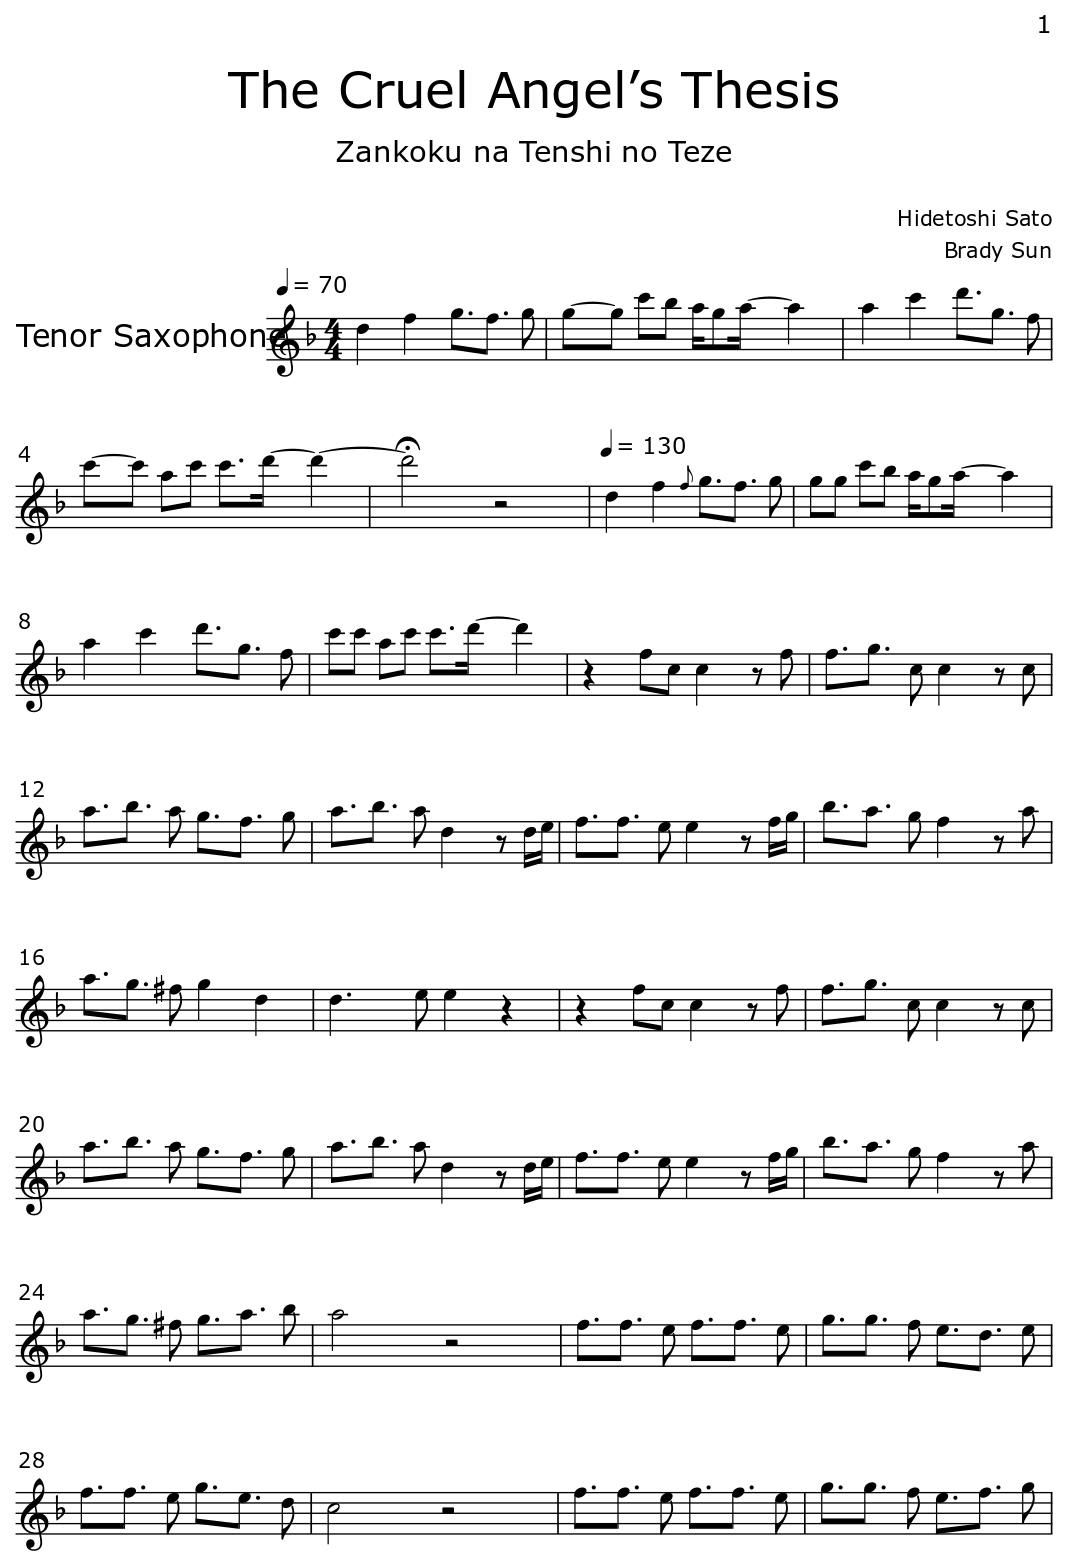 a cruel angel's thesis tenor sax